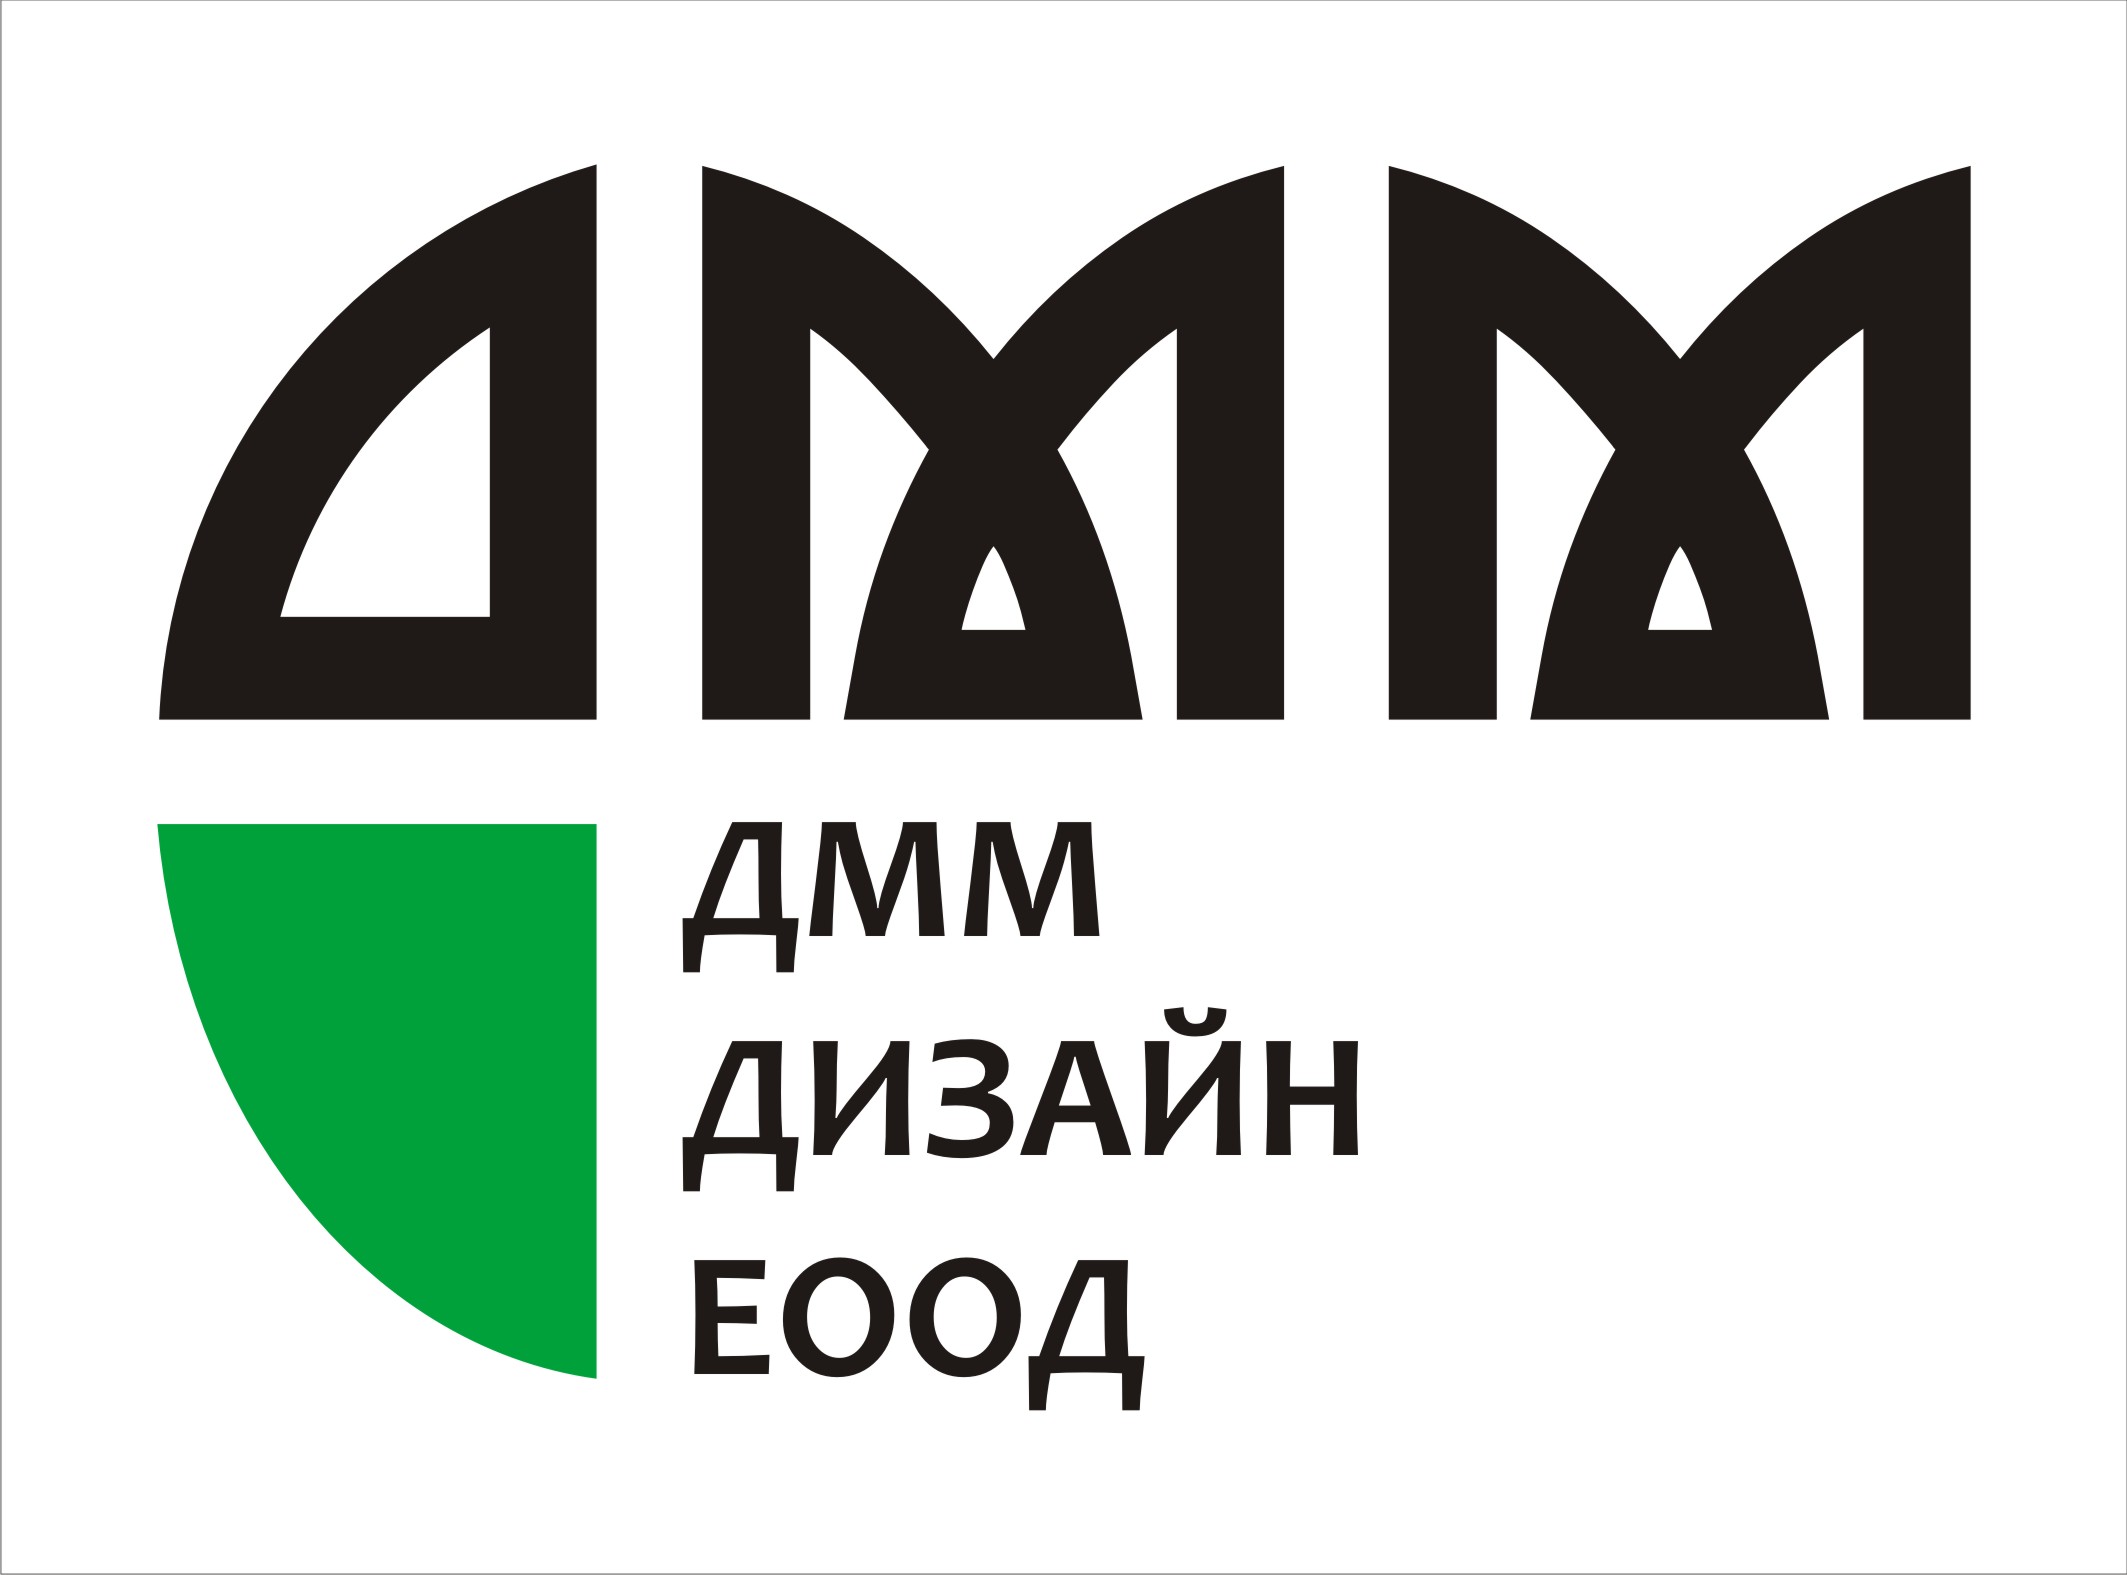 Лого на ДММ - ДИЗАЙН EООД